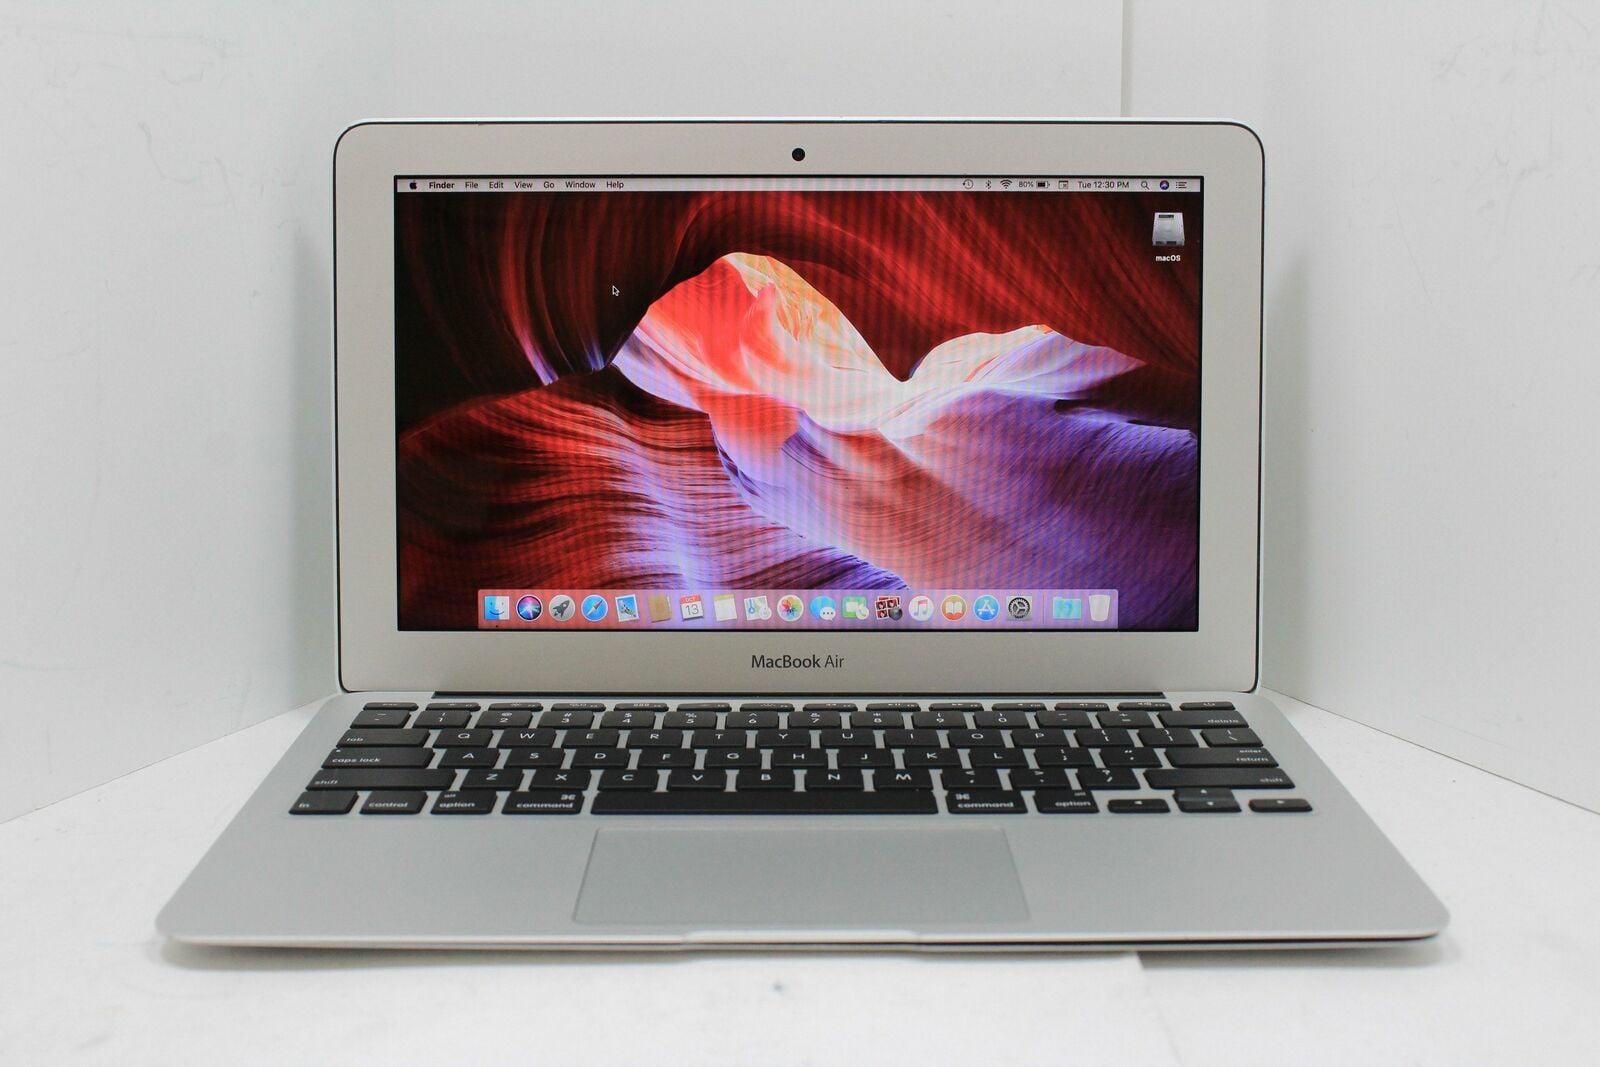 Apple Macbook Air Core I5-4250u Dual-core 1.3ghz 4gb 128gb Ssd 11.6 Led